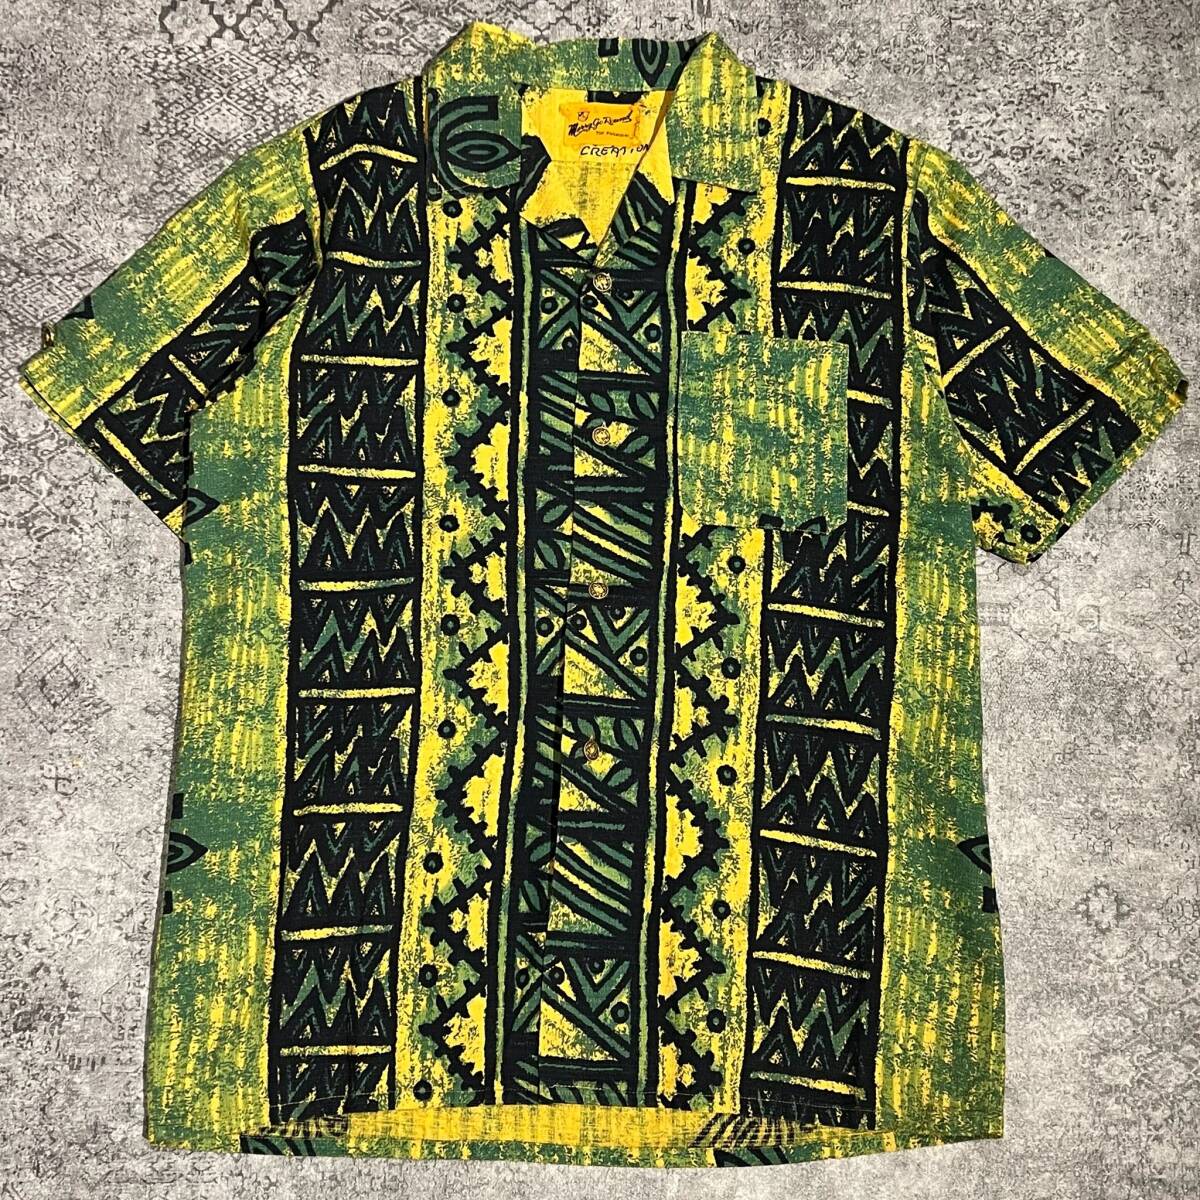 Vintage 60s Aloha Shirt アロハシャツ 古銭ボタン 総柄 グリーン イエロー 60年代 ヴィンテージ ビンテージの画像1